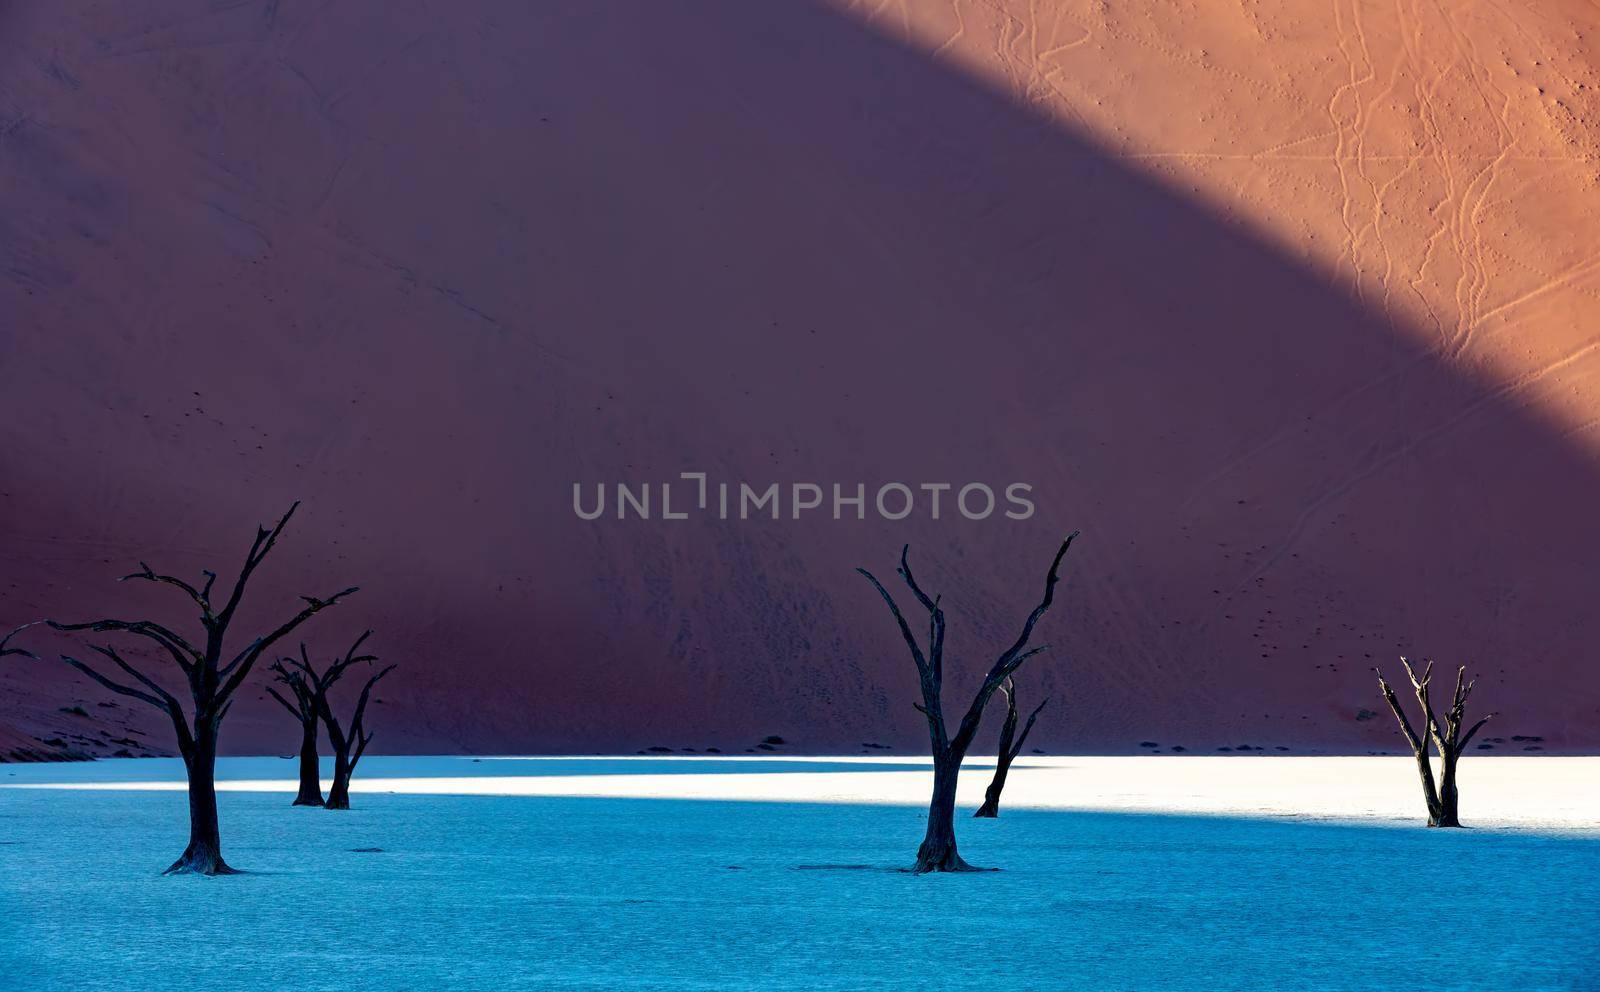 Dead Vlei landscape in Sossusvlei, Namibia by artush